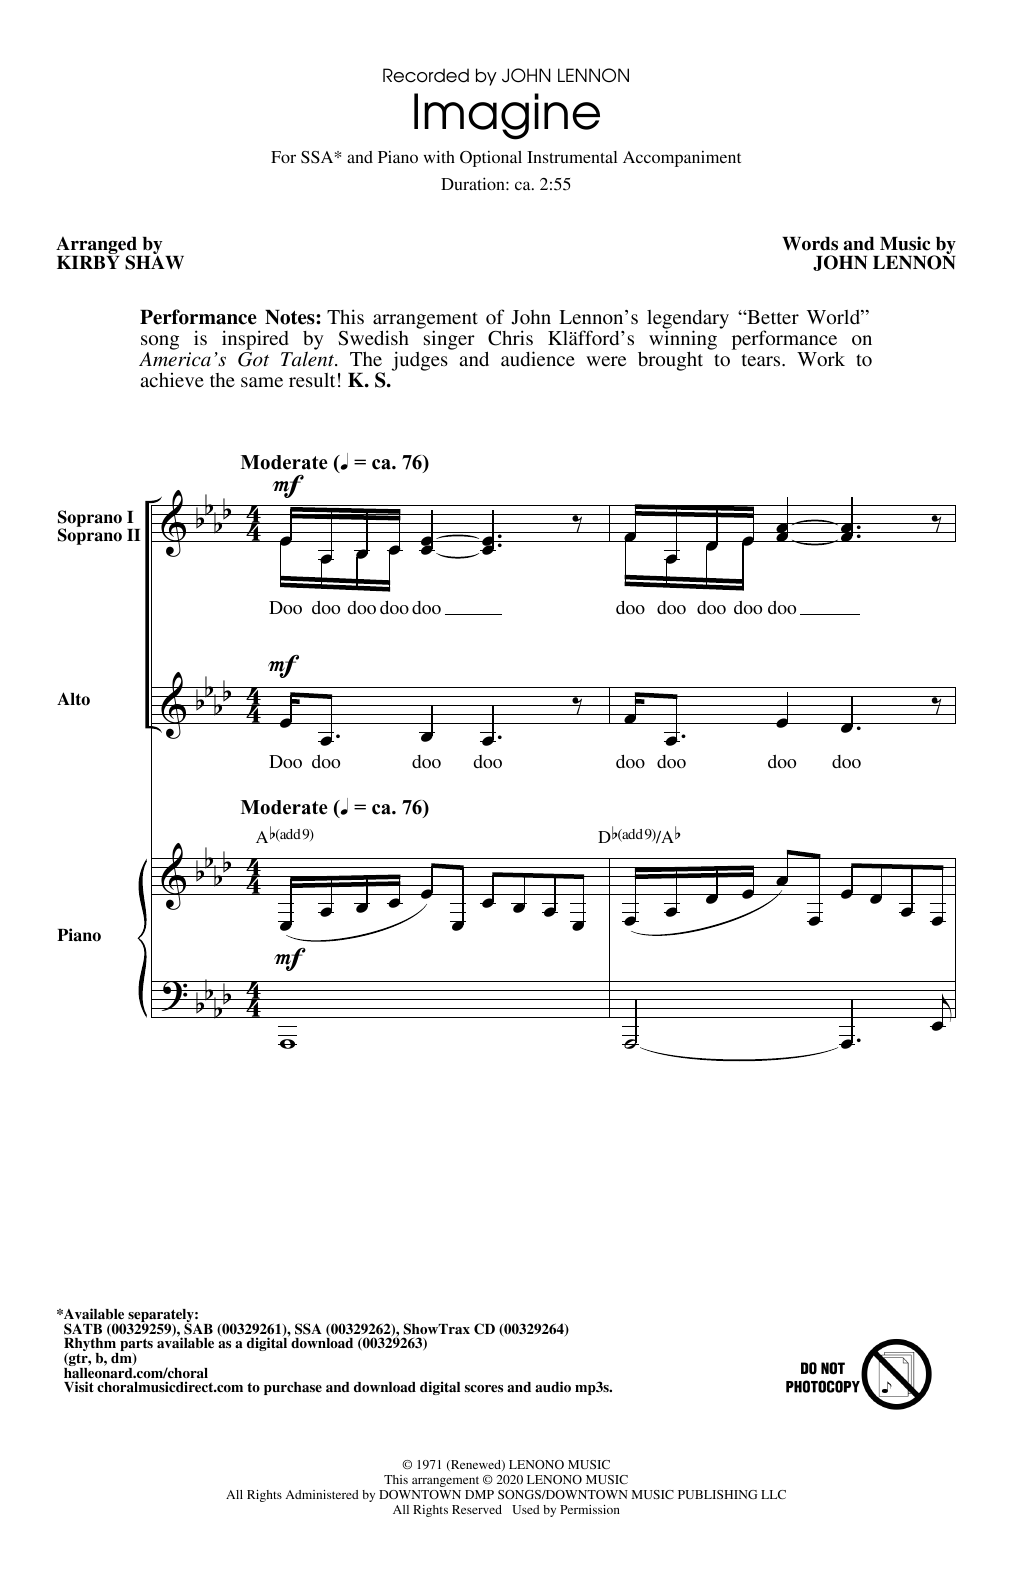 John Lennon Imagine (arr. Kirby Shaw) Sheet Music Notes & Chords for SATB Choir - Download or Print PDF